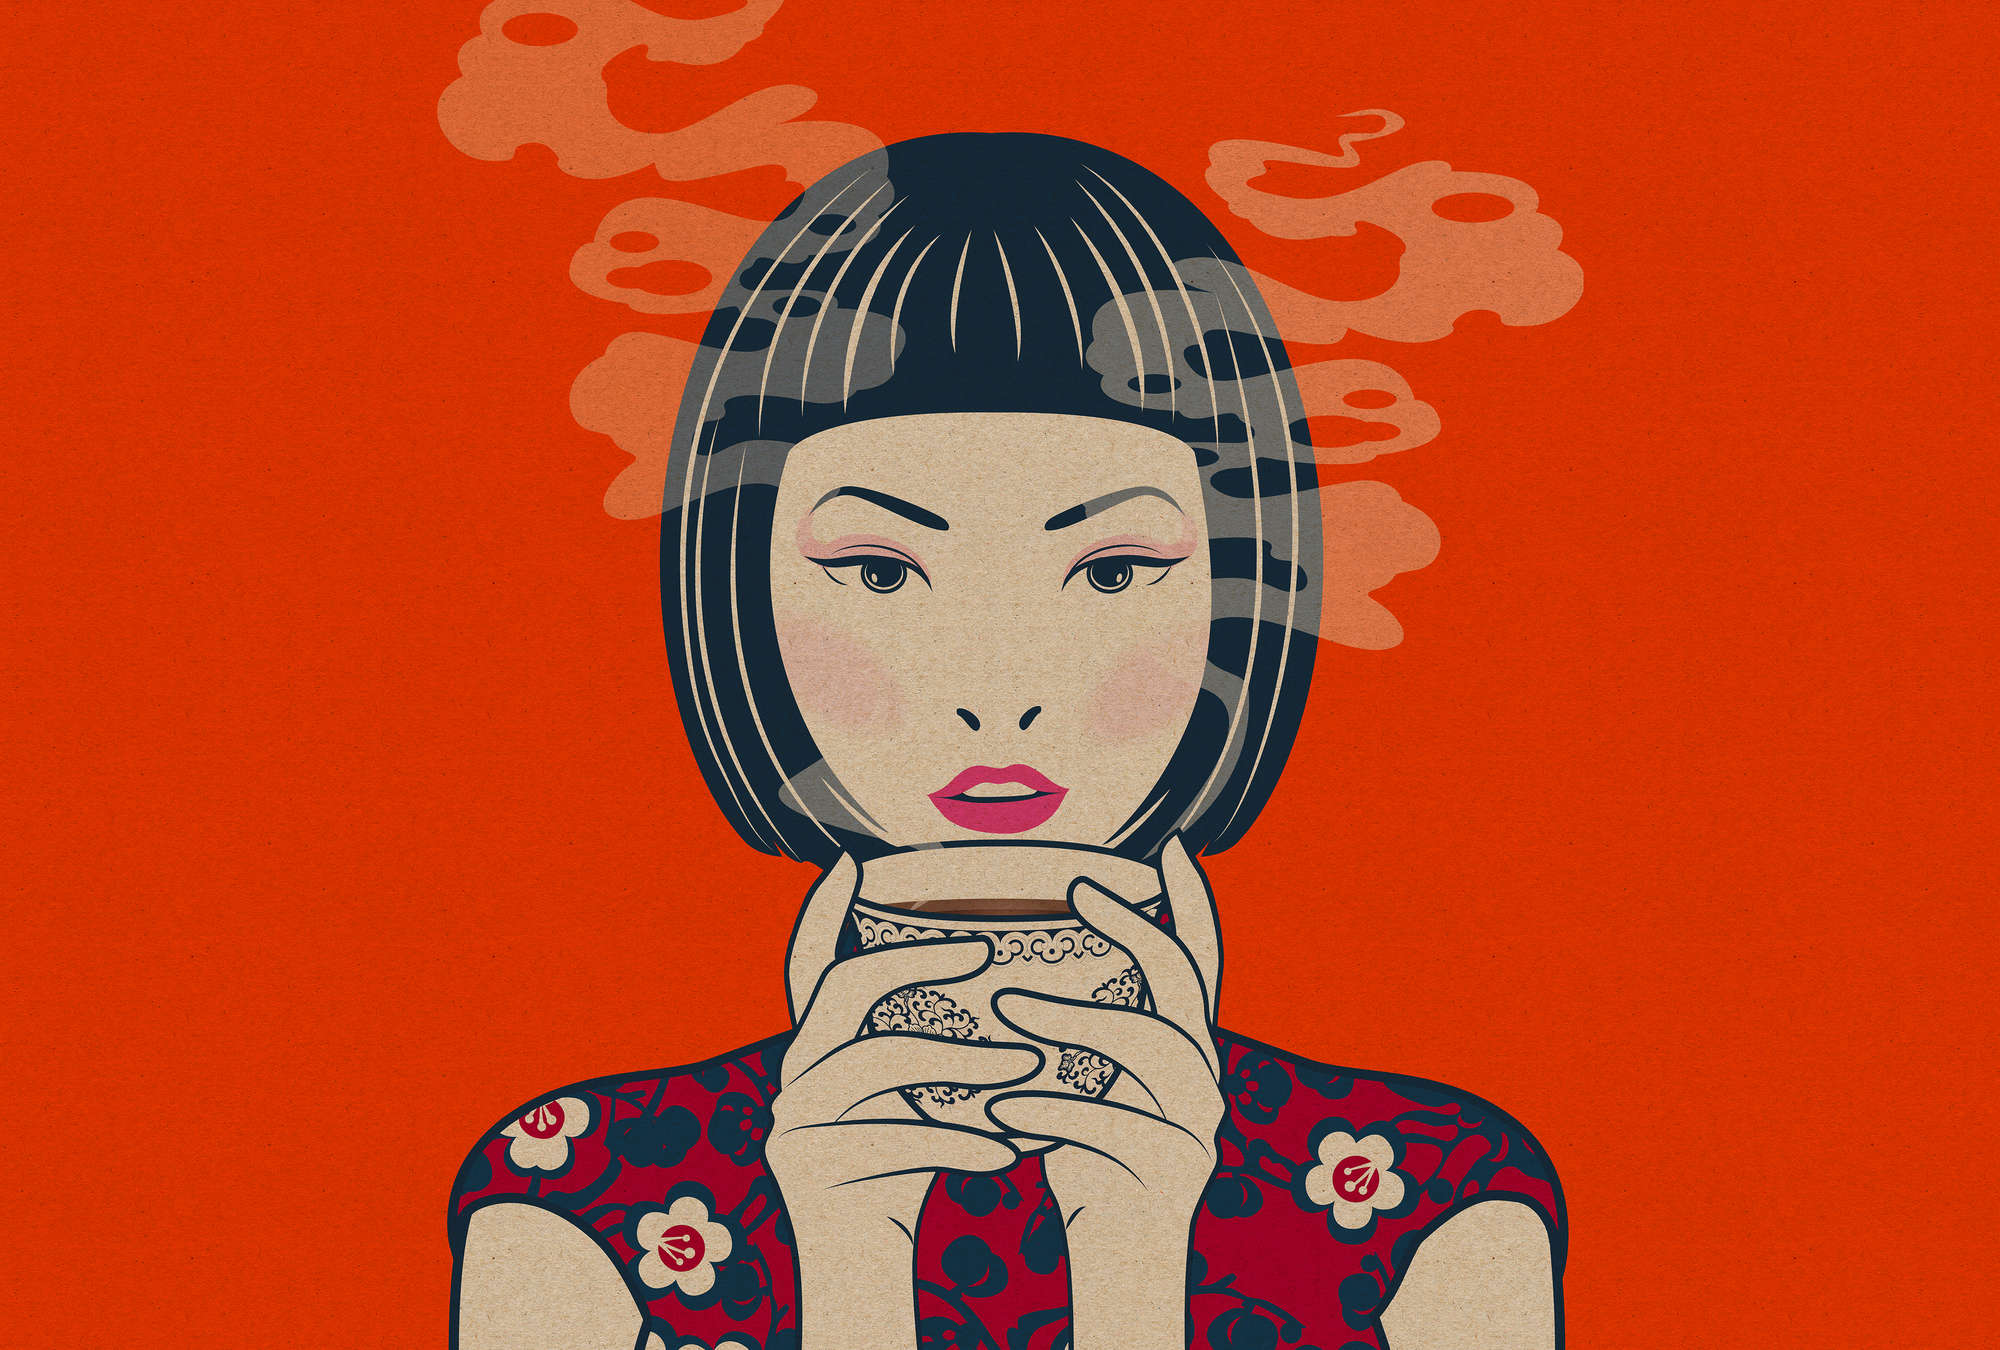             Akari 2 - Time for tea, manga style in cardboard structure on photo wallpaper - Beige, Orange | Pearl smooth fleece
        